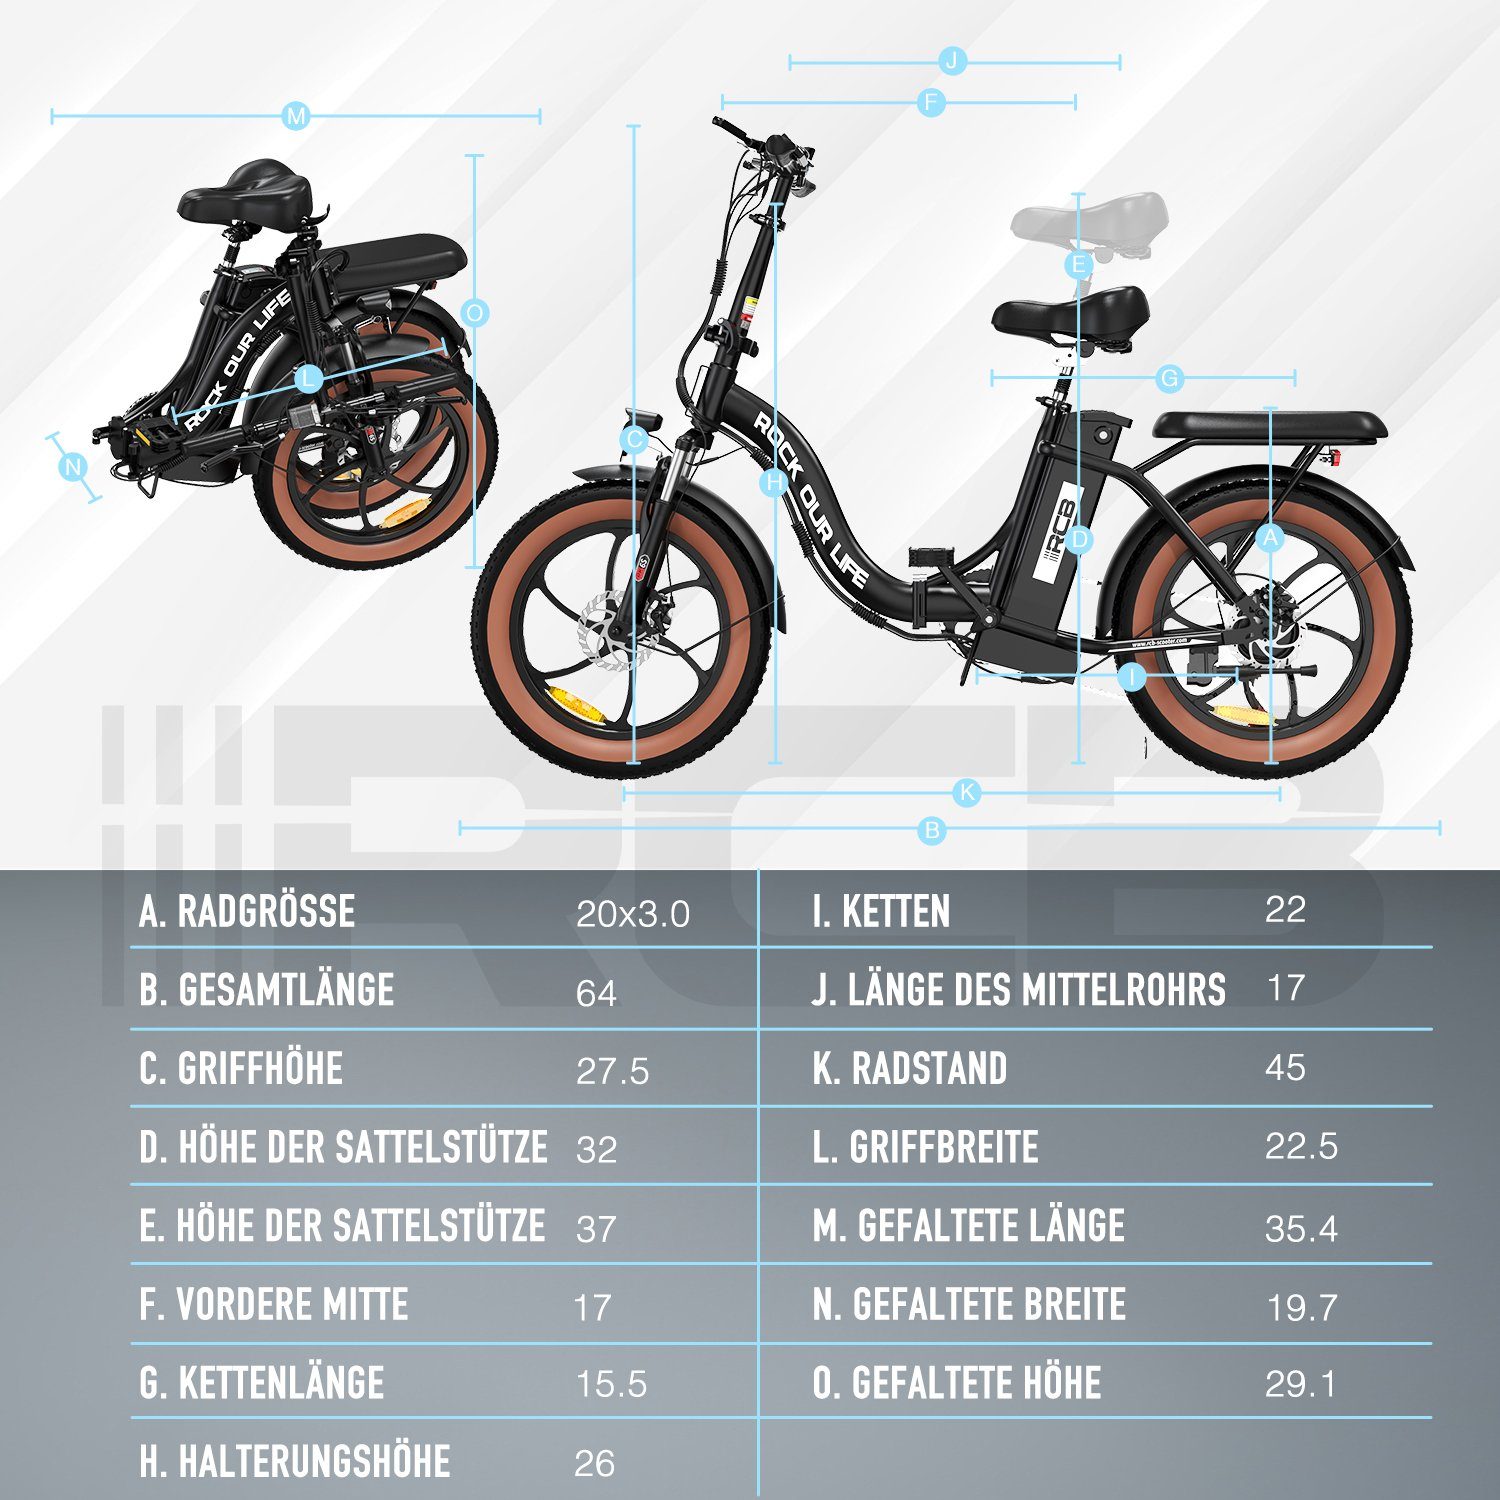 E-Bike Elektrofahrrad, 12AH Pendler, Gängen 250W, 36V Lithiumbatterie RCB 7 für